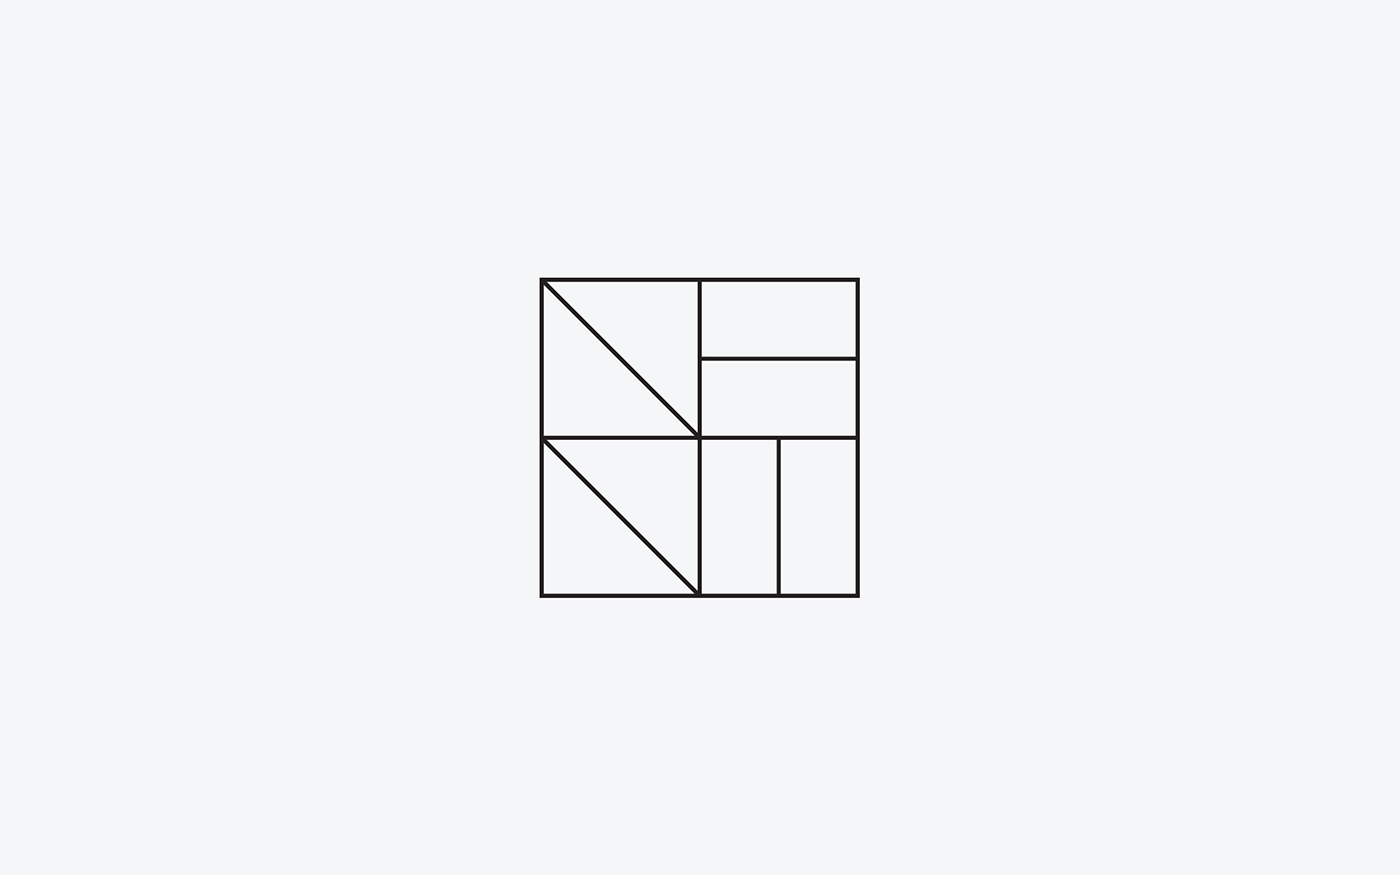 Identity Design interior design  Logo Design geometric neni studio modular